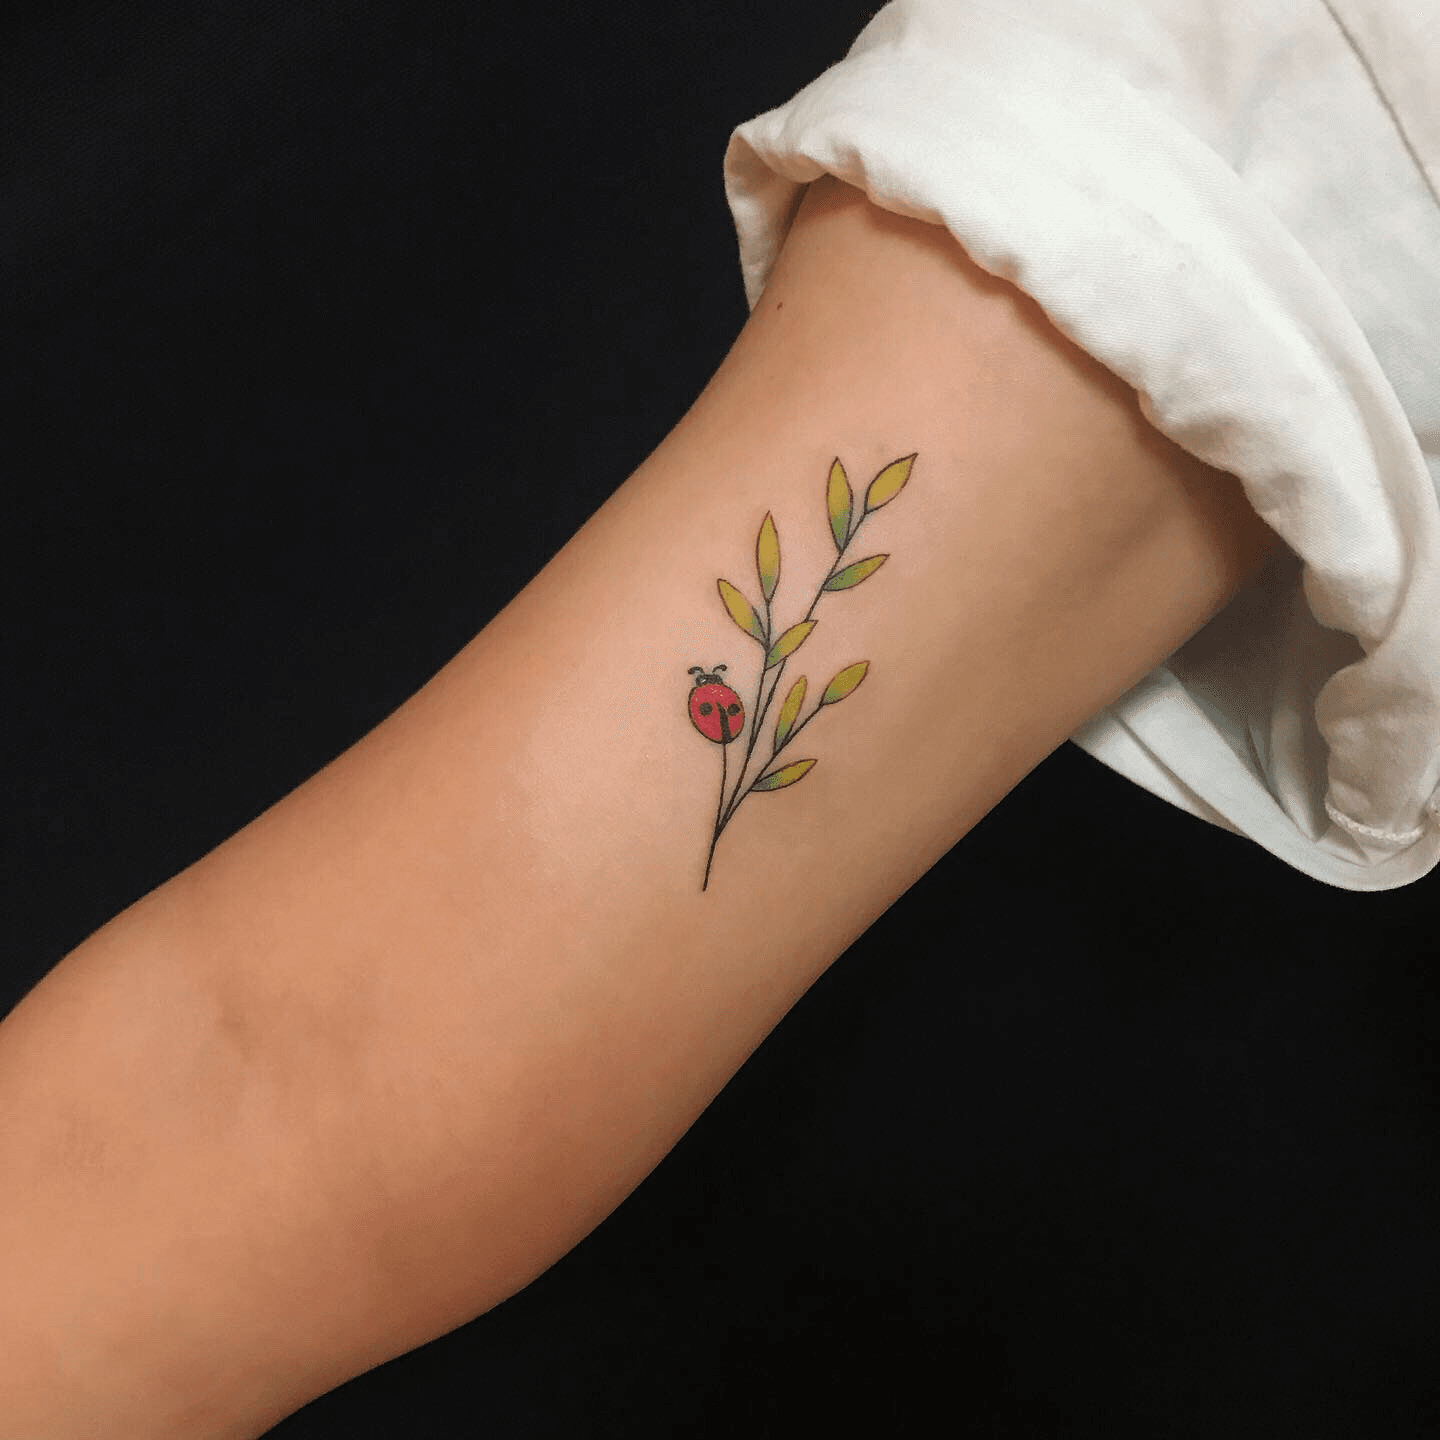 Ladybug color small cute tattoo by ovumink on DeviantArt